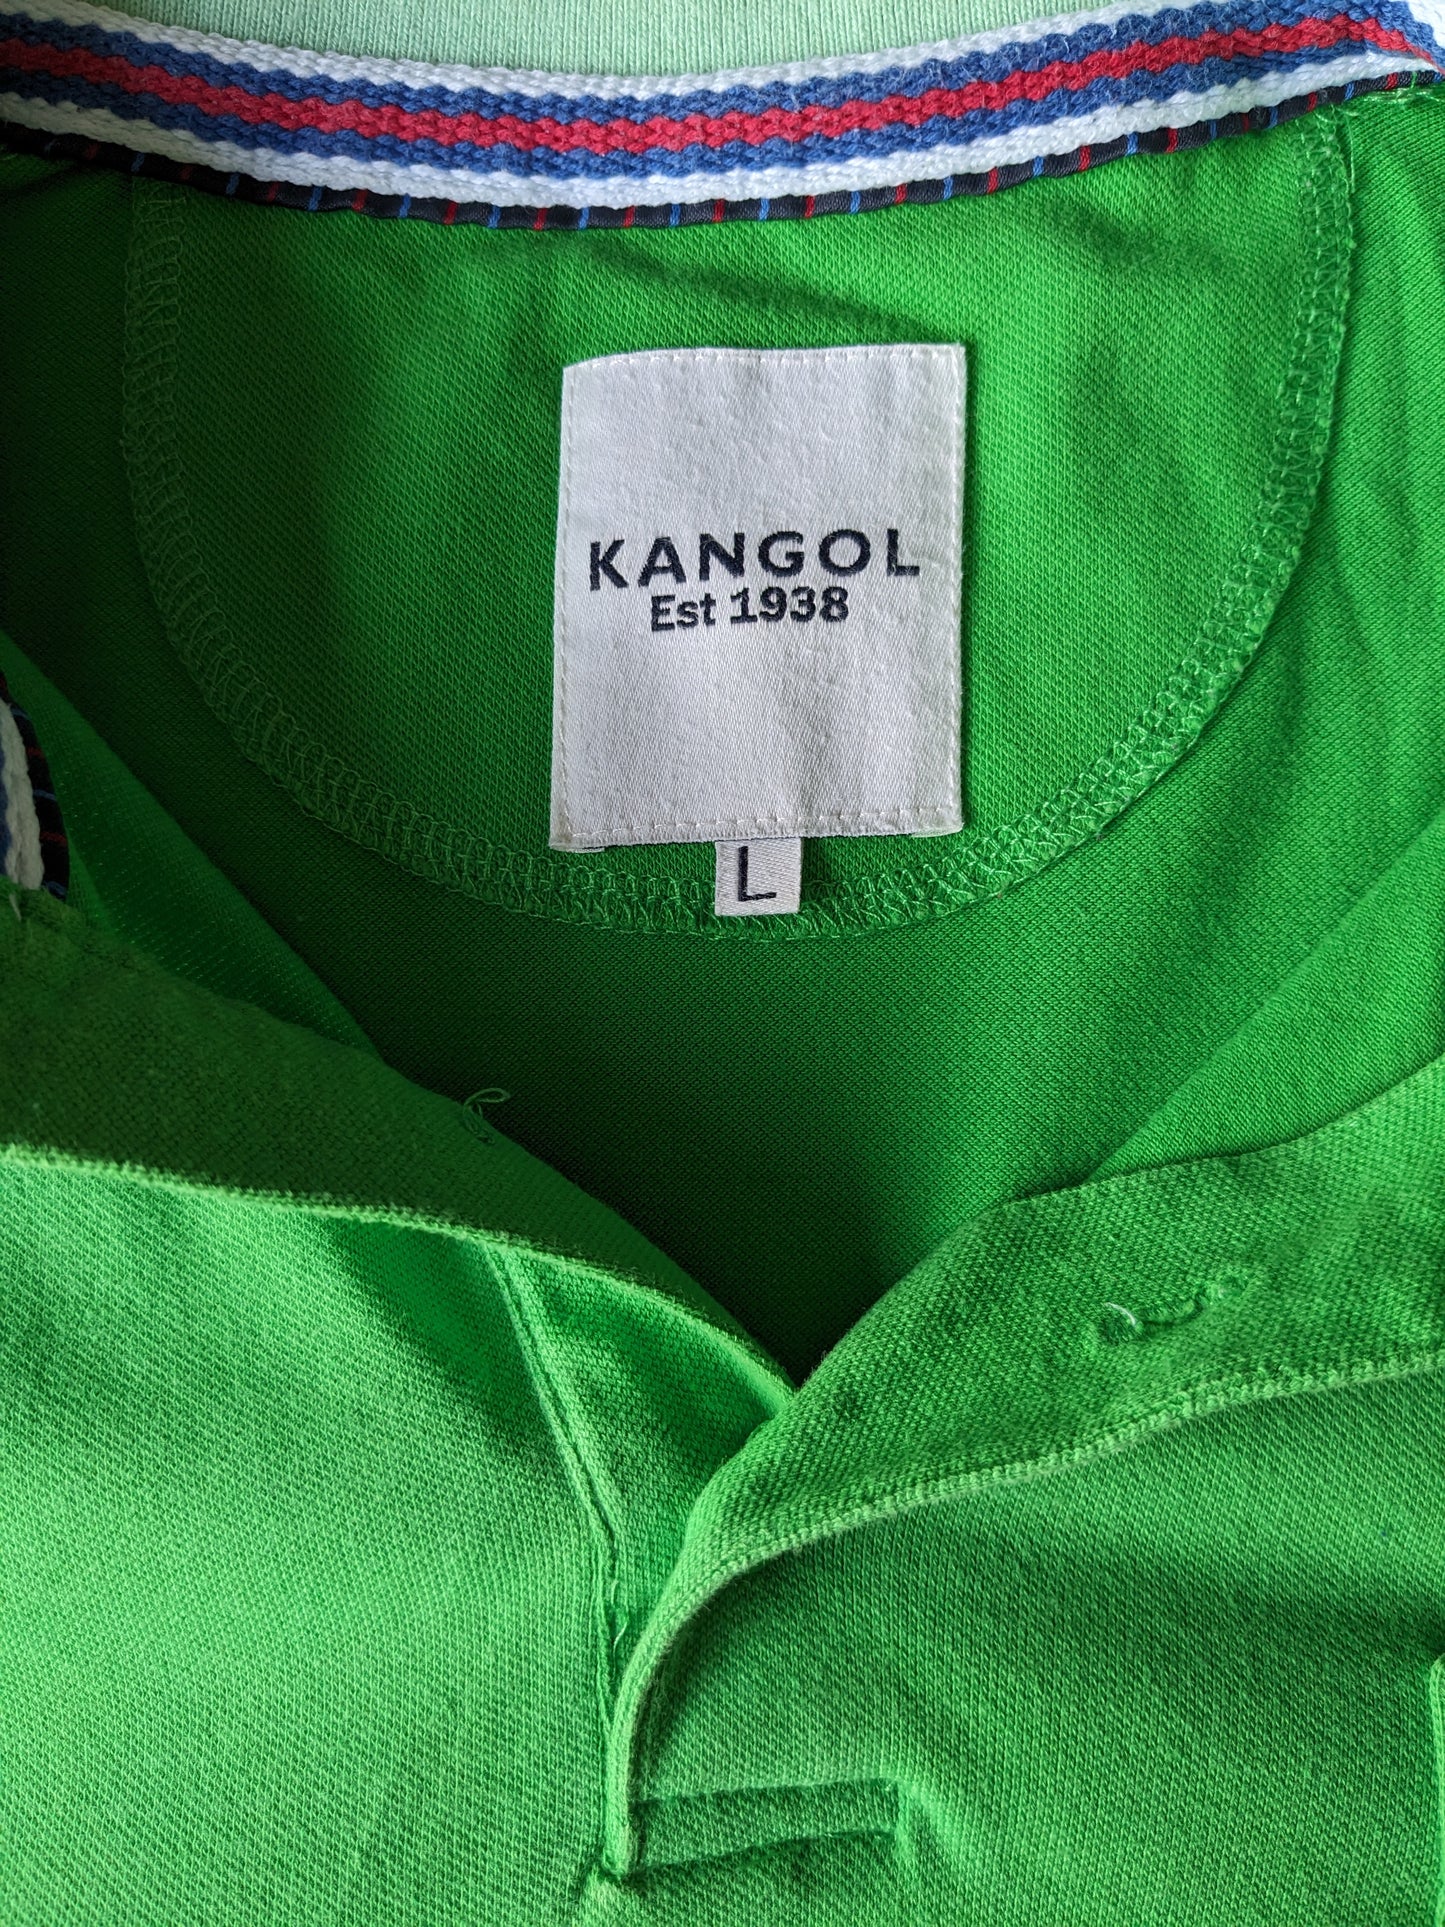 Vintage Kangol polo. Groen gekleurd, met gekleurd gestreepte accenten. Maat L.